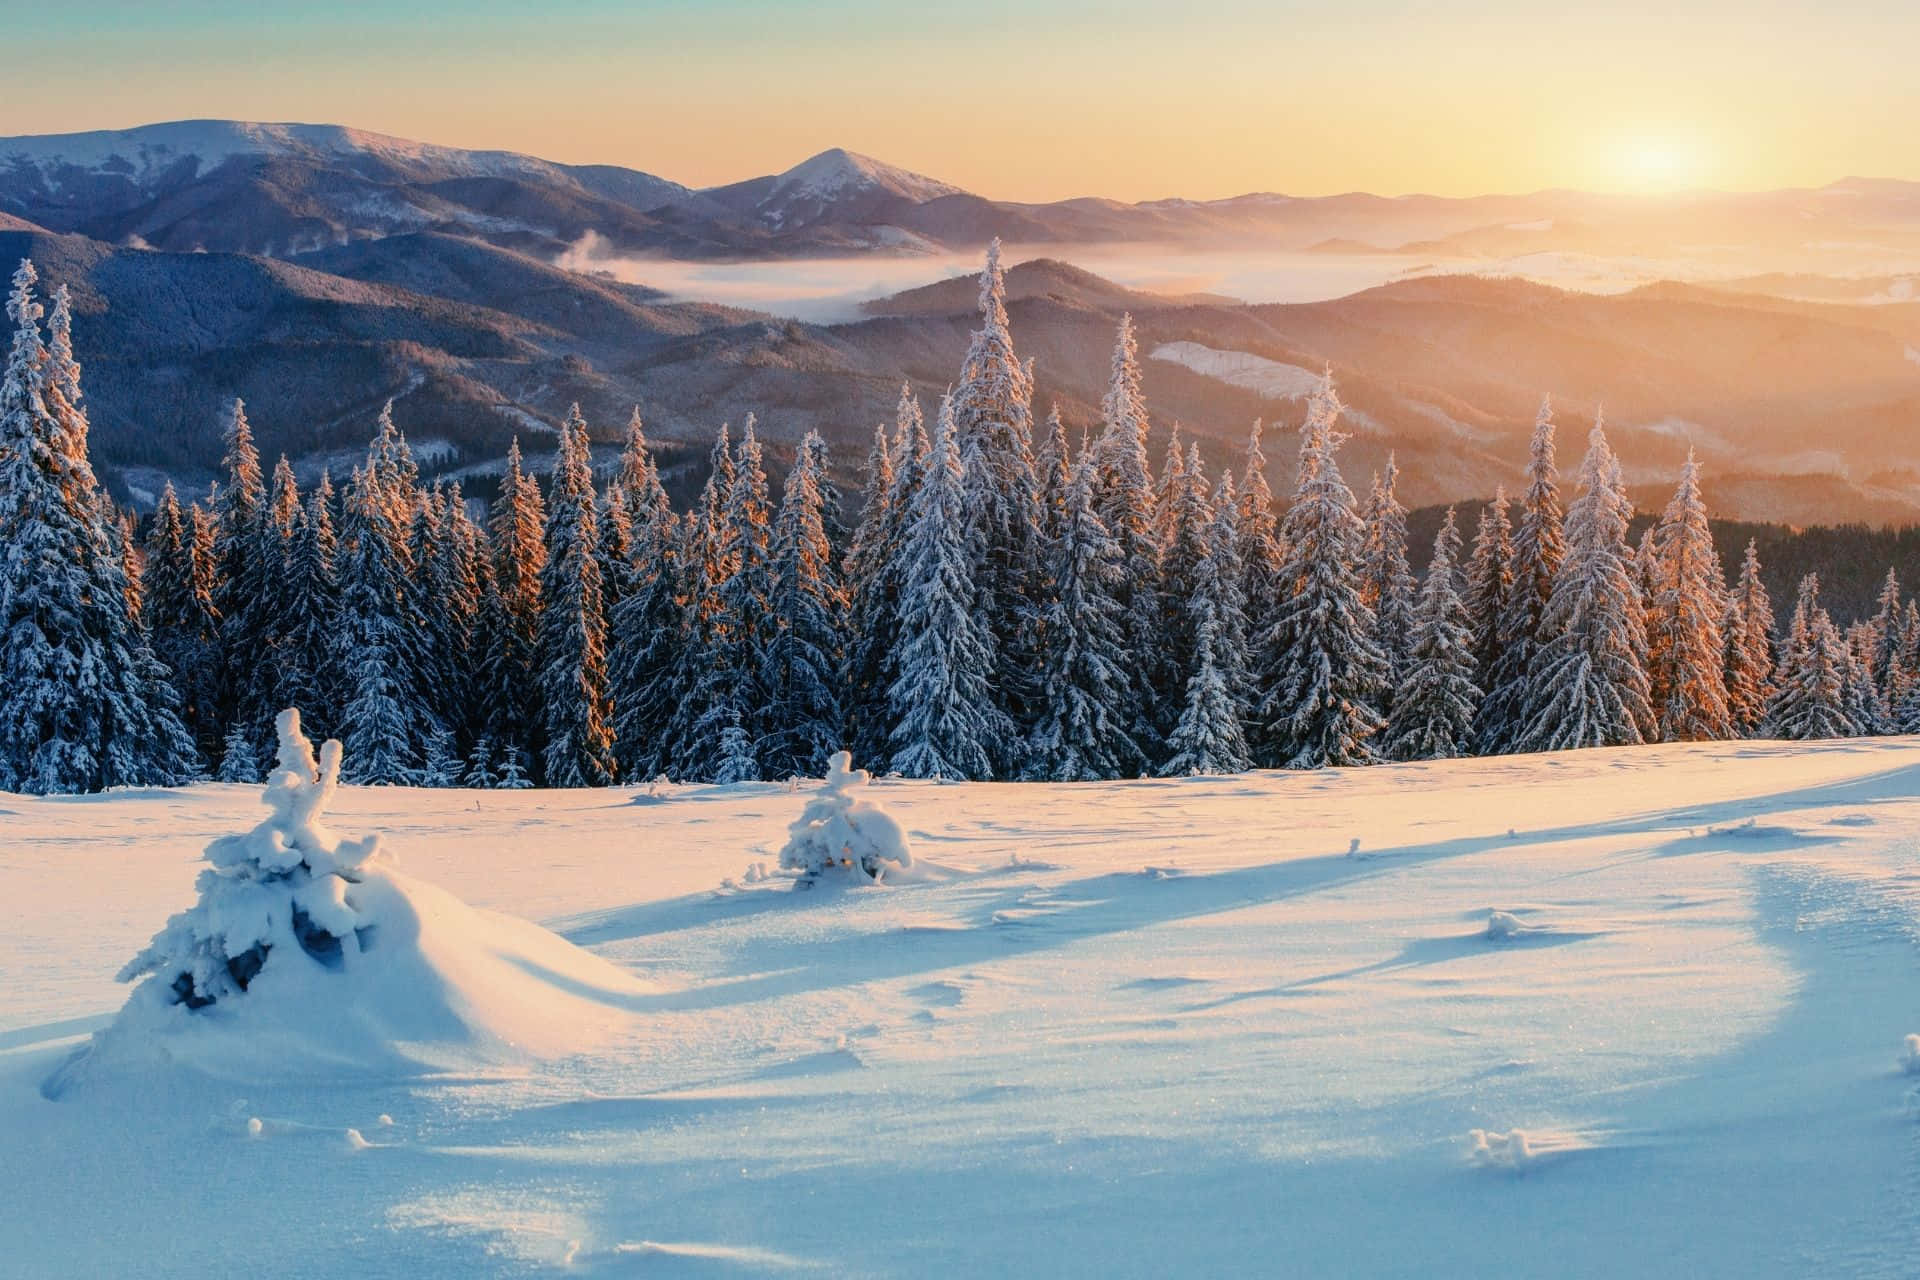 Take a Magical Zoom through the Snowy Mountains